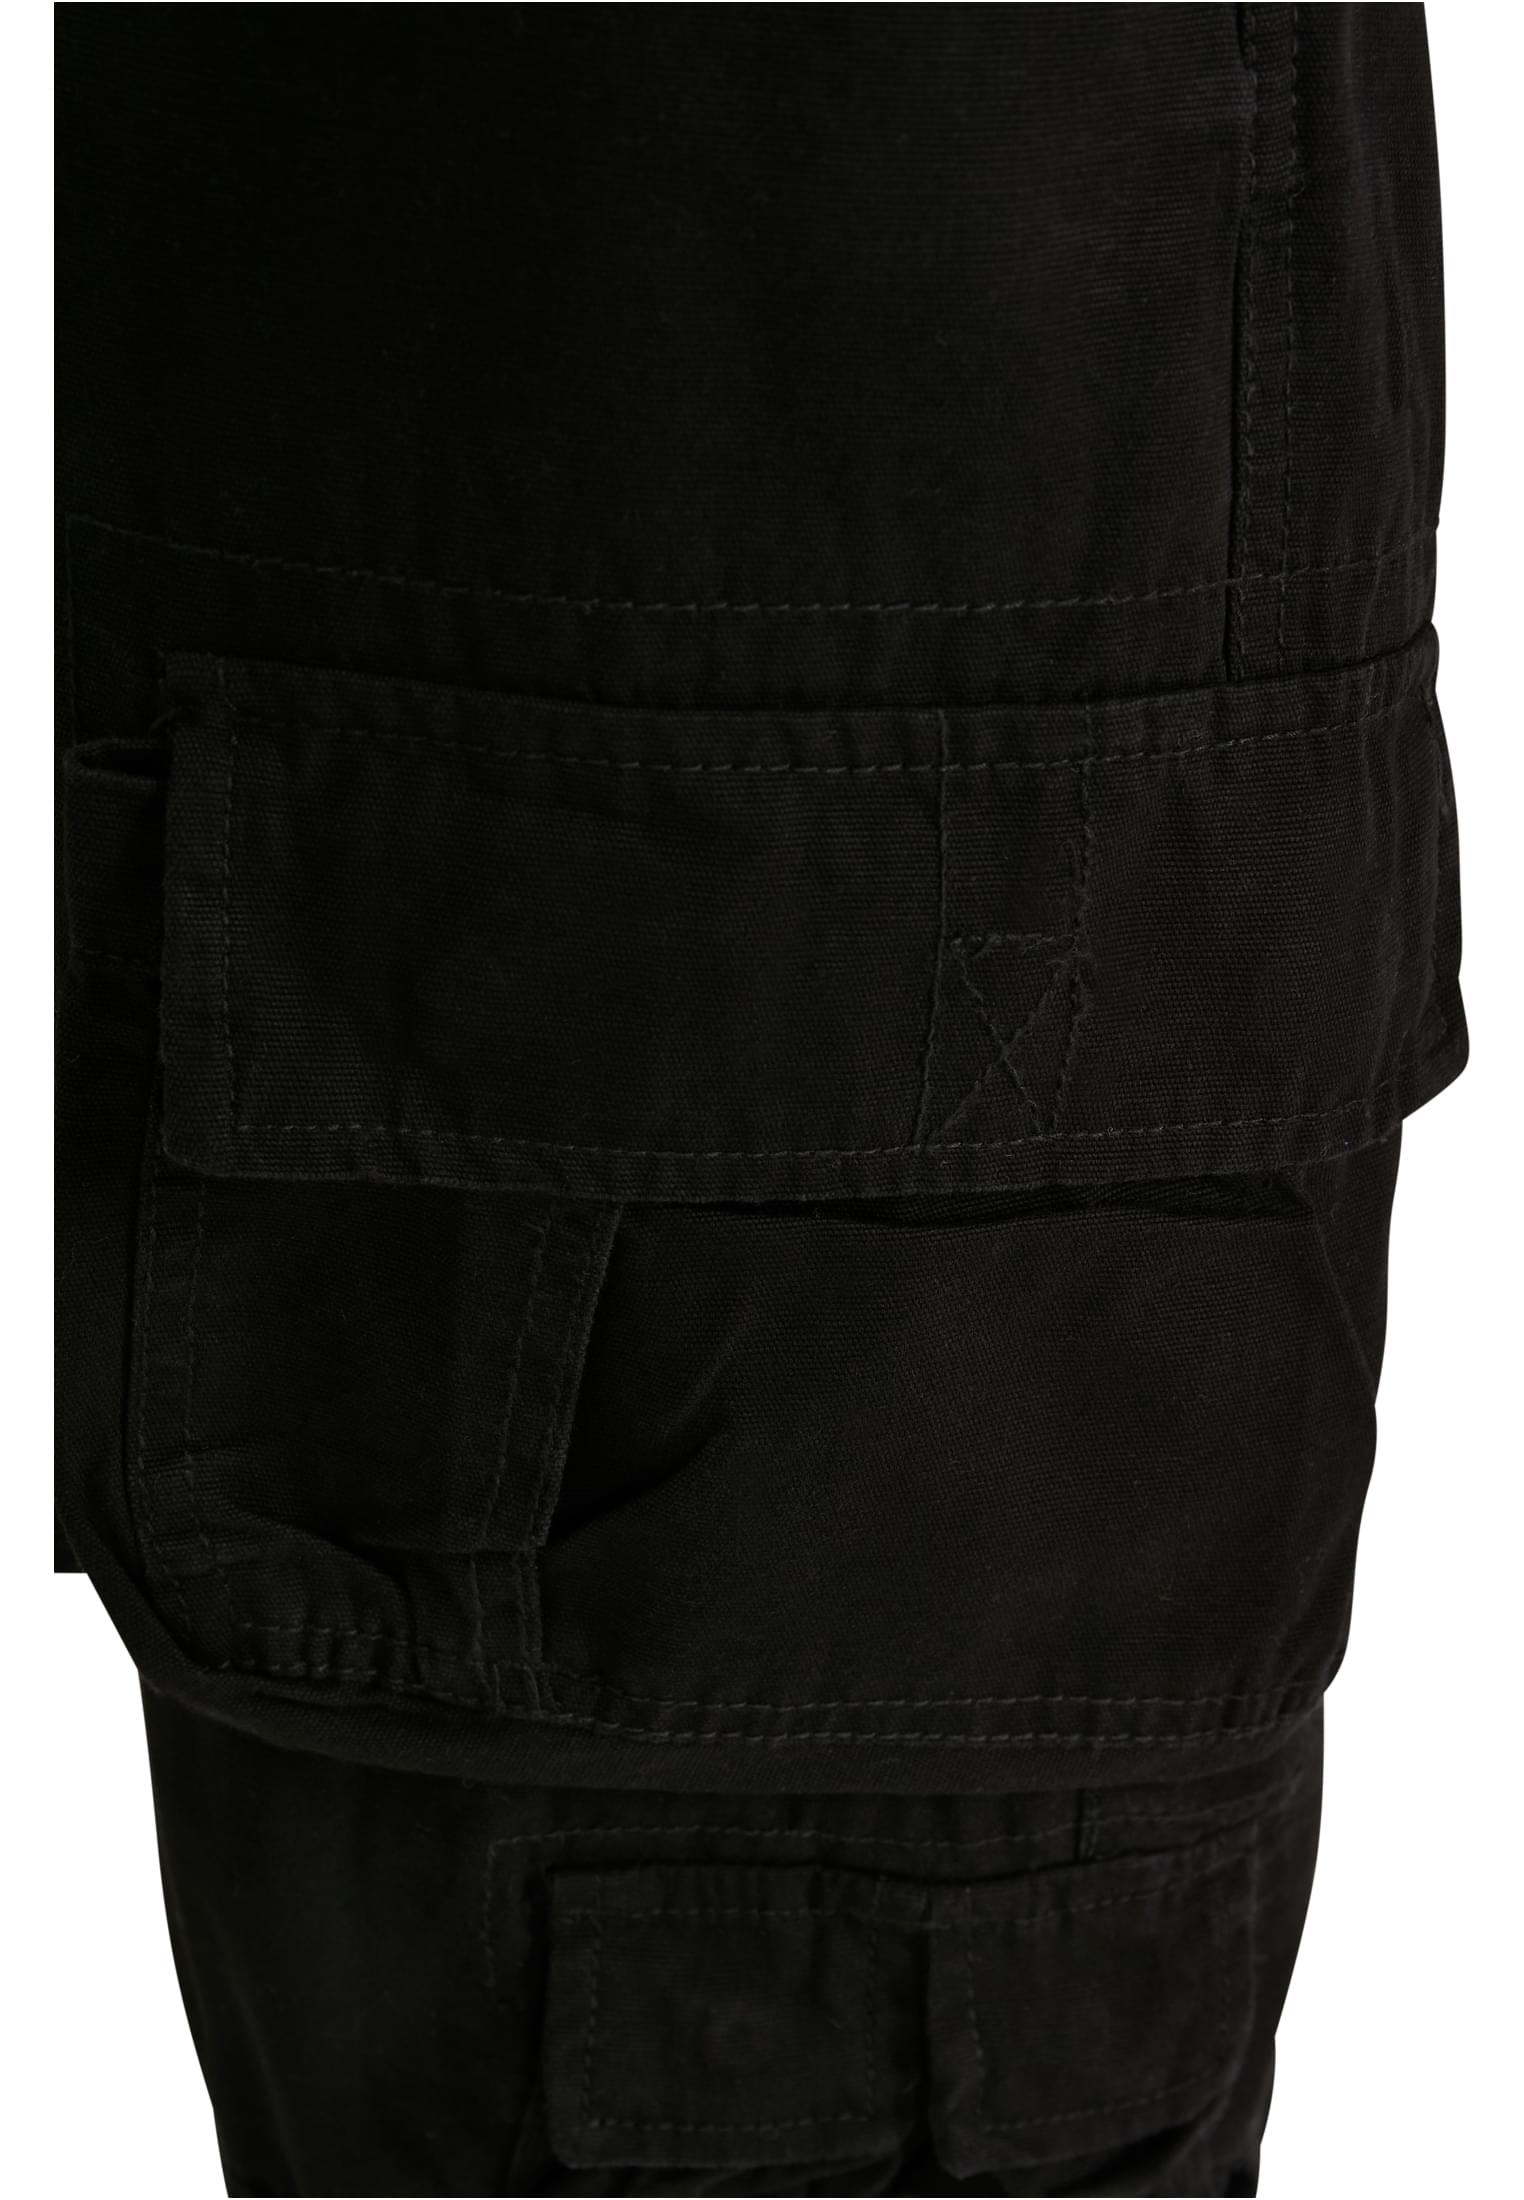 Shorts Savage Vintage Cargo Shorts in Farbe black